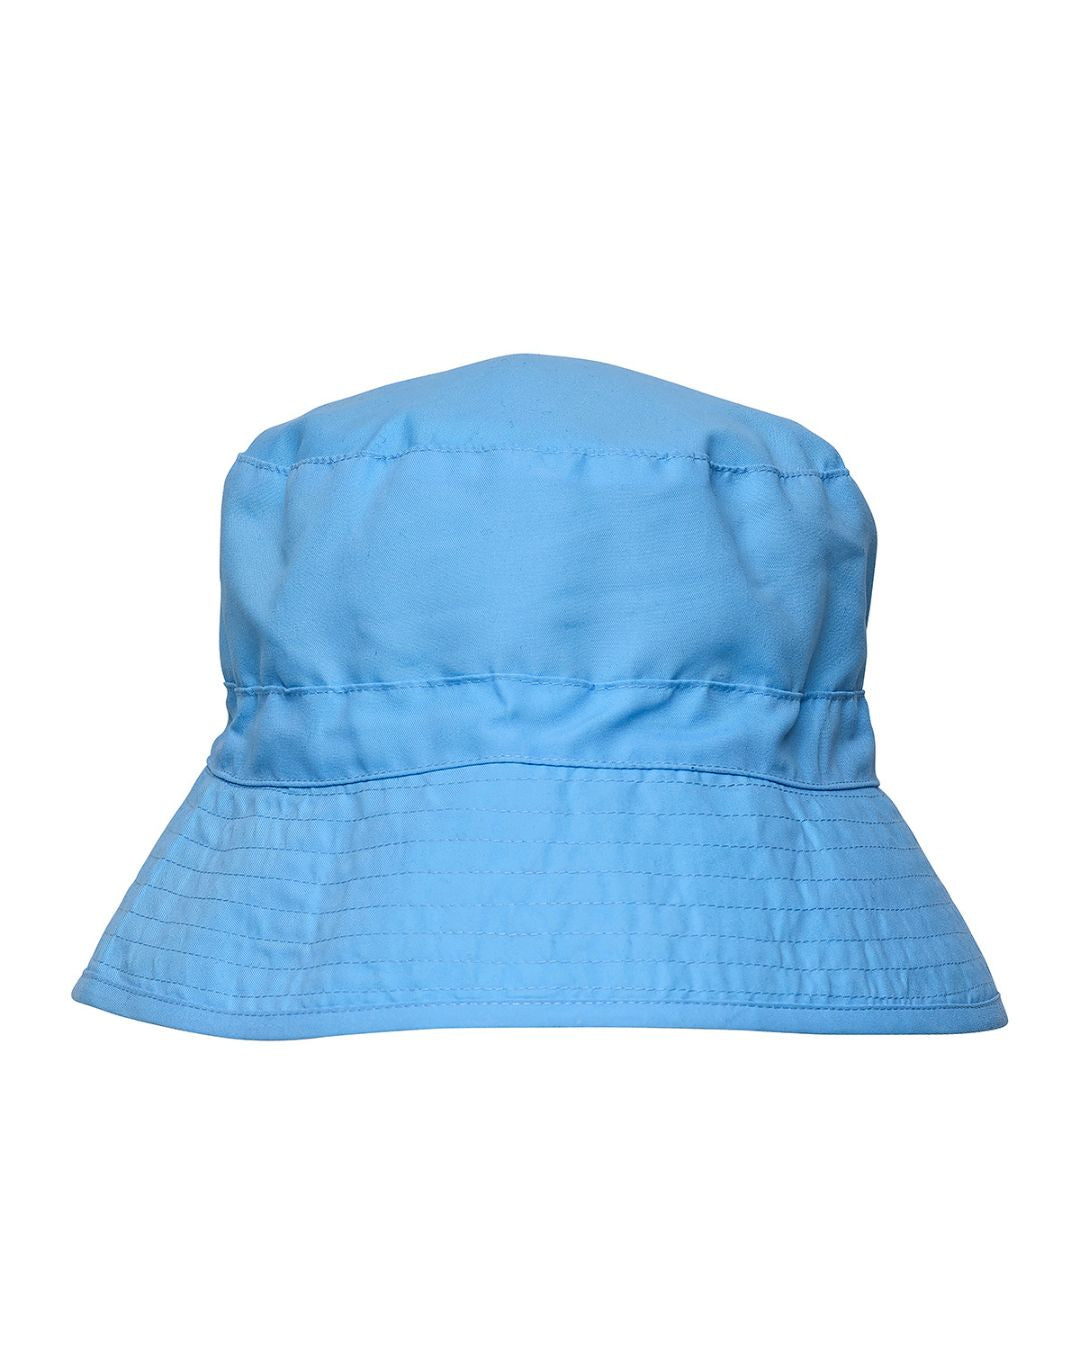 Bucket hat Light Blue with UPF 50+ sun protection flatlay